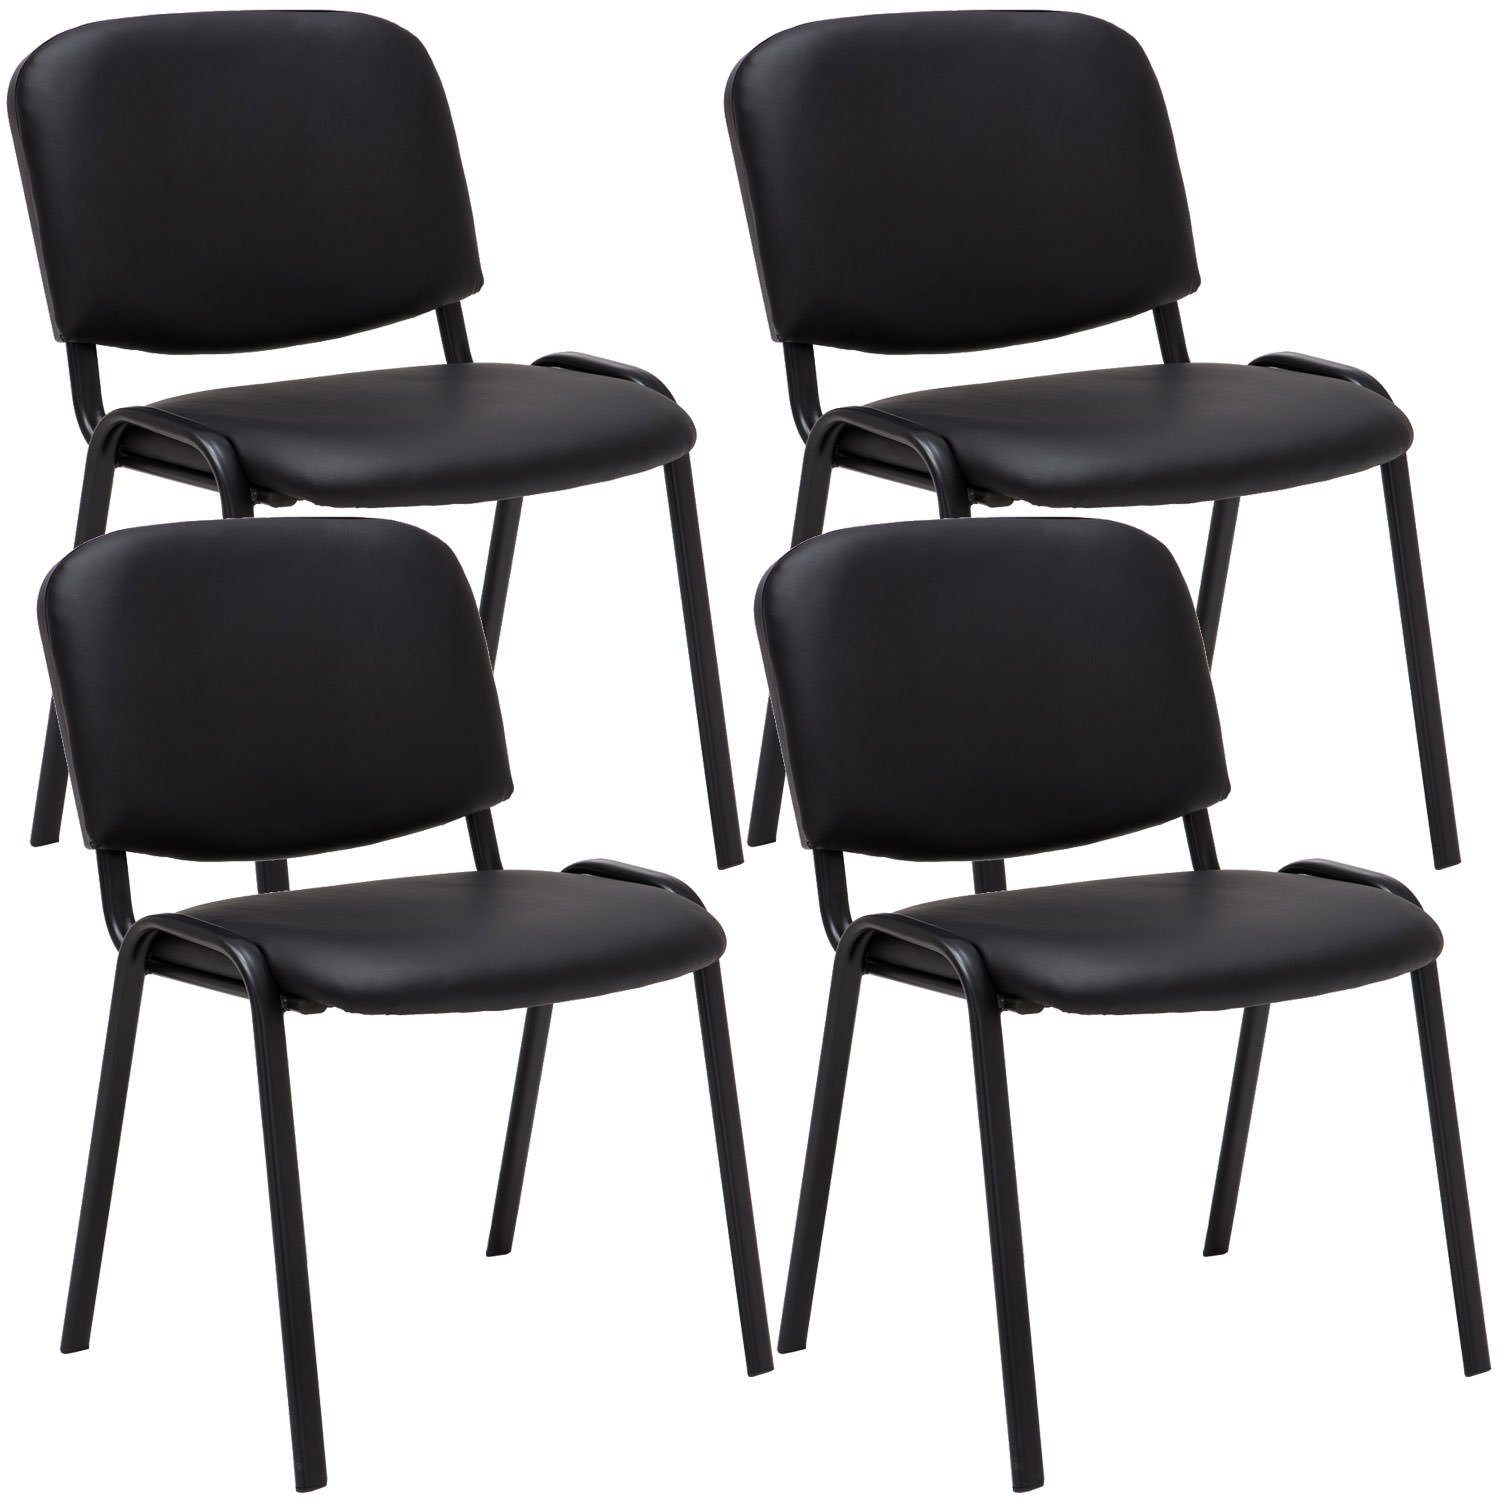 TPFLiving Besucherstuhl Keen mit hochwertiger Polsterung - Konferenzstuhl (Besprechungsstuhl - Warteraumstuhl - Messestuhl, 4 St), Gestell: Metall matt schwarz - Sitzfläche: Kunstleder schwarz